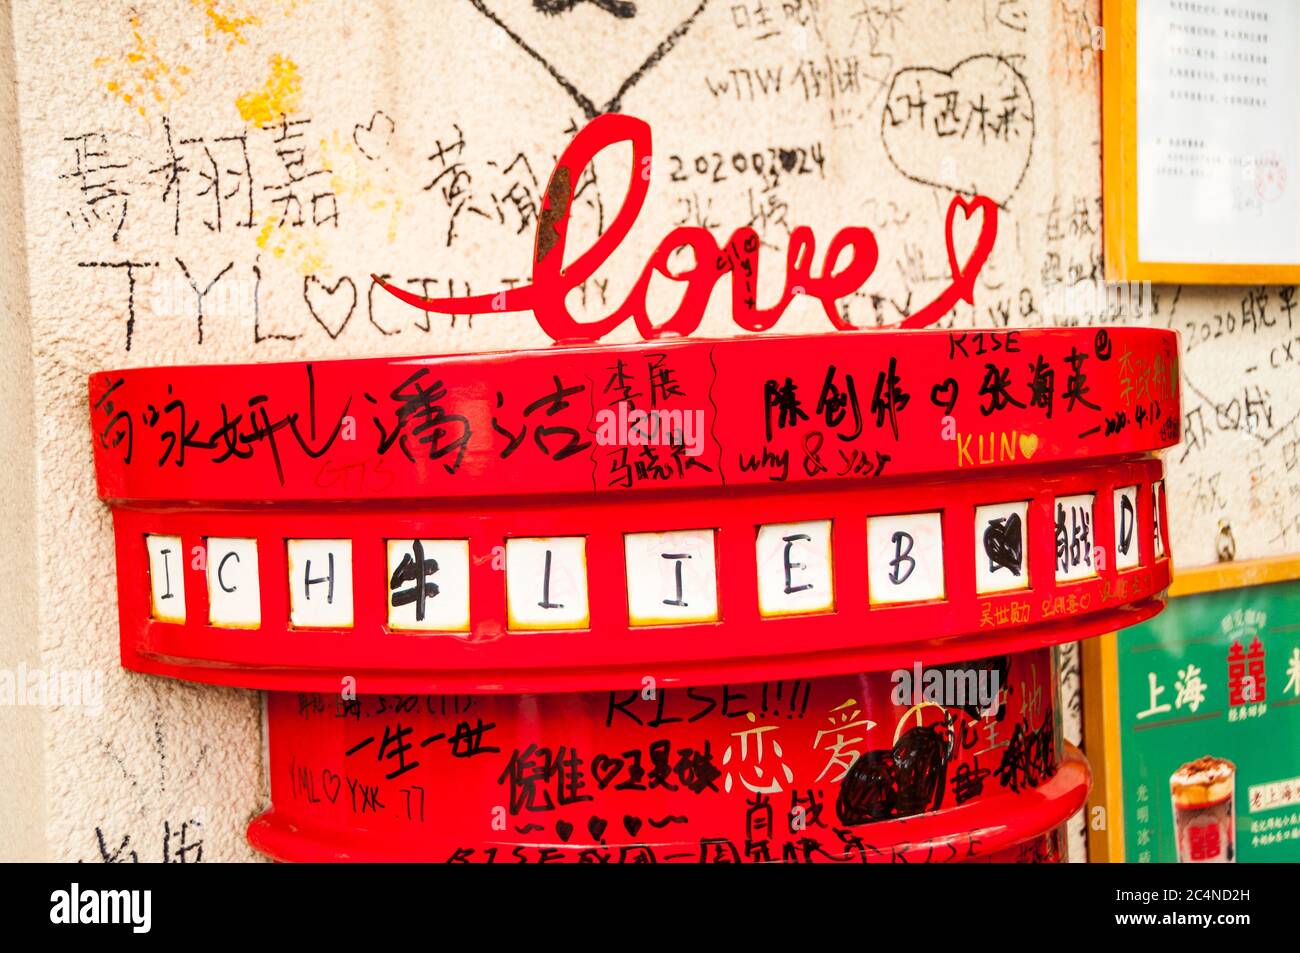 The red post box at Tianai (sweet love) Lounge on Hongkou’s Tianai Road in Shanghai. Stock Photo